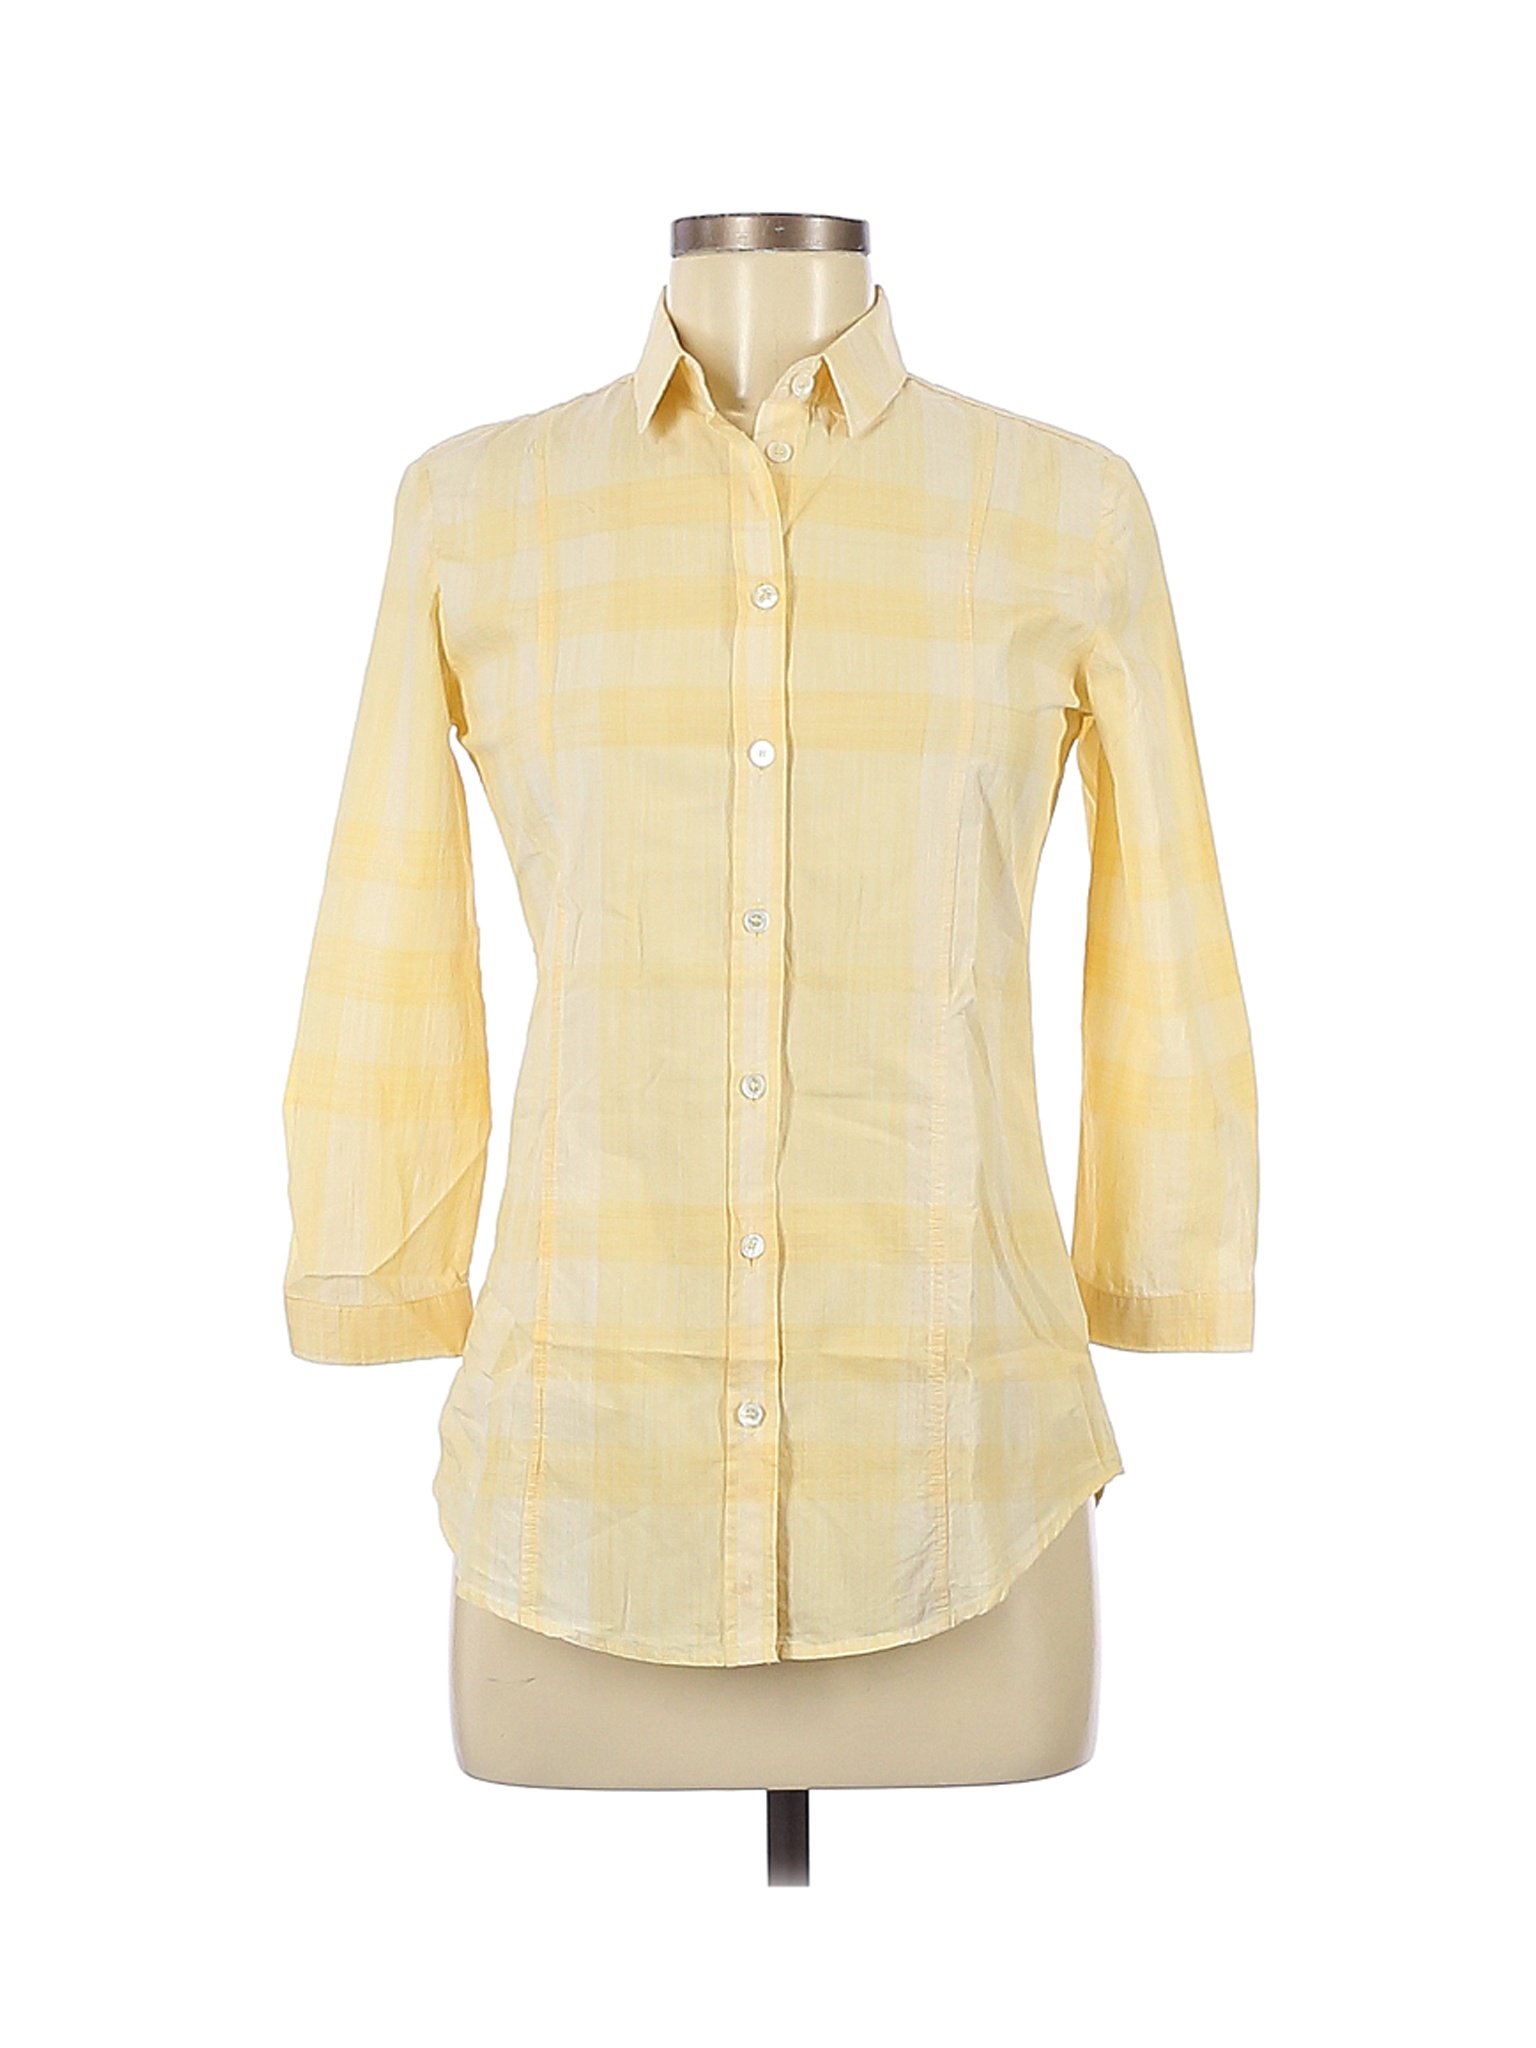 Burberry Brit Women Yellow 3/4 Sleeve Button-Down Shirt XS | eBay